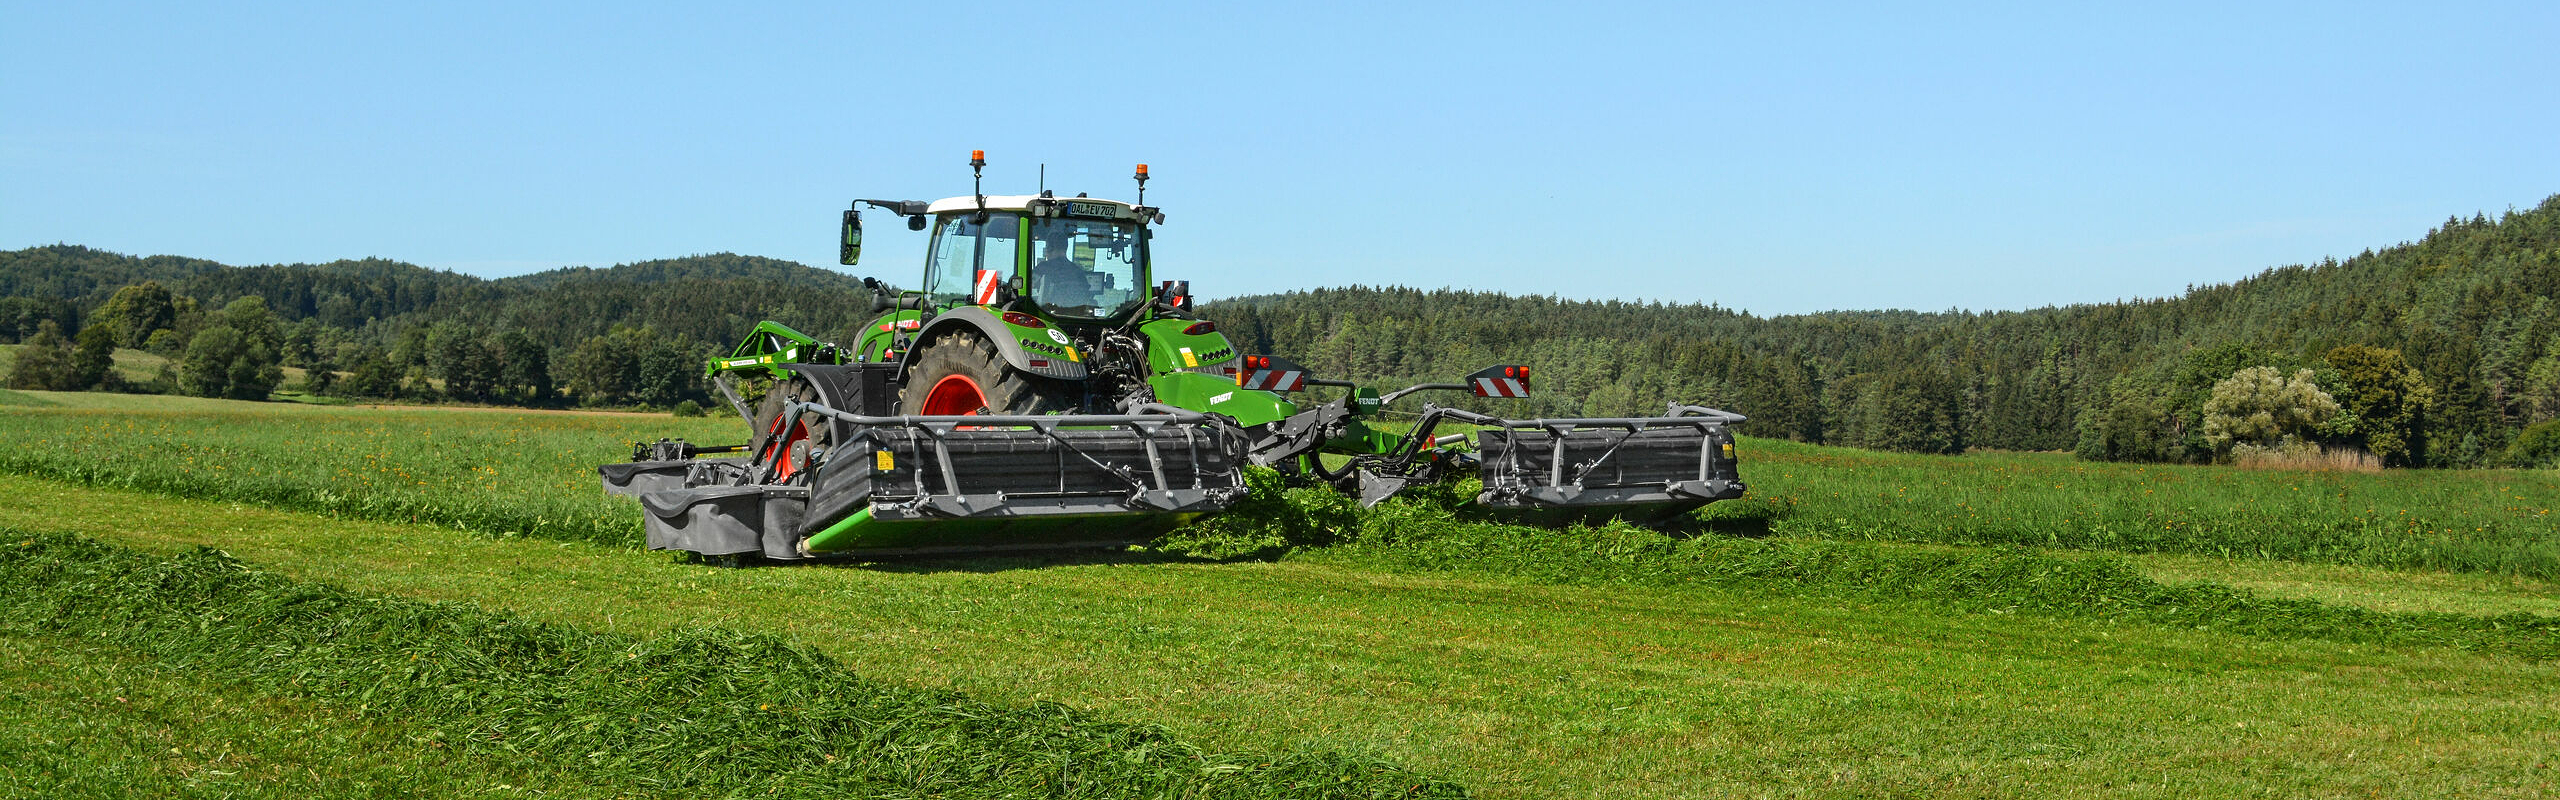 Fendt-traktor i grönområdet skördar med Fendt Slicer